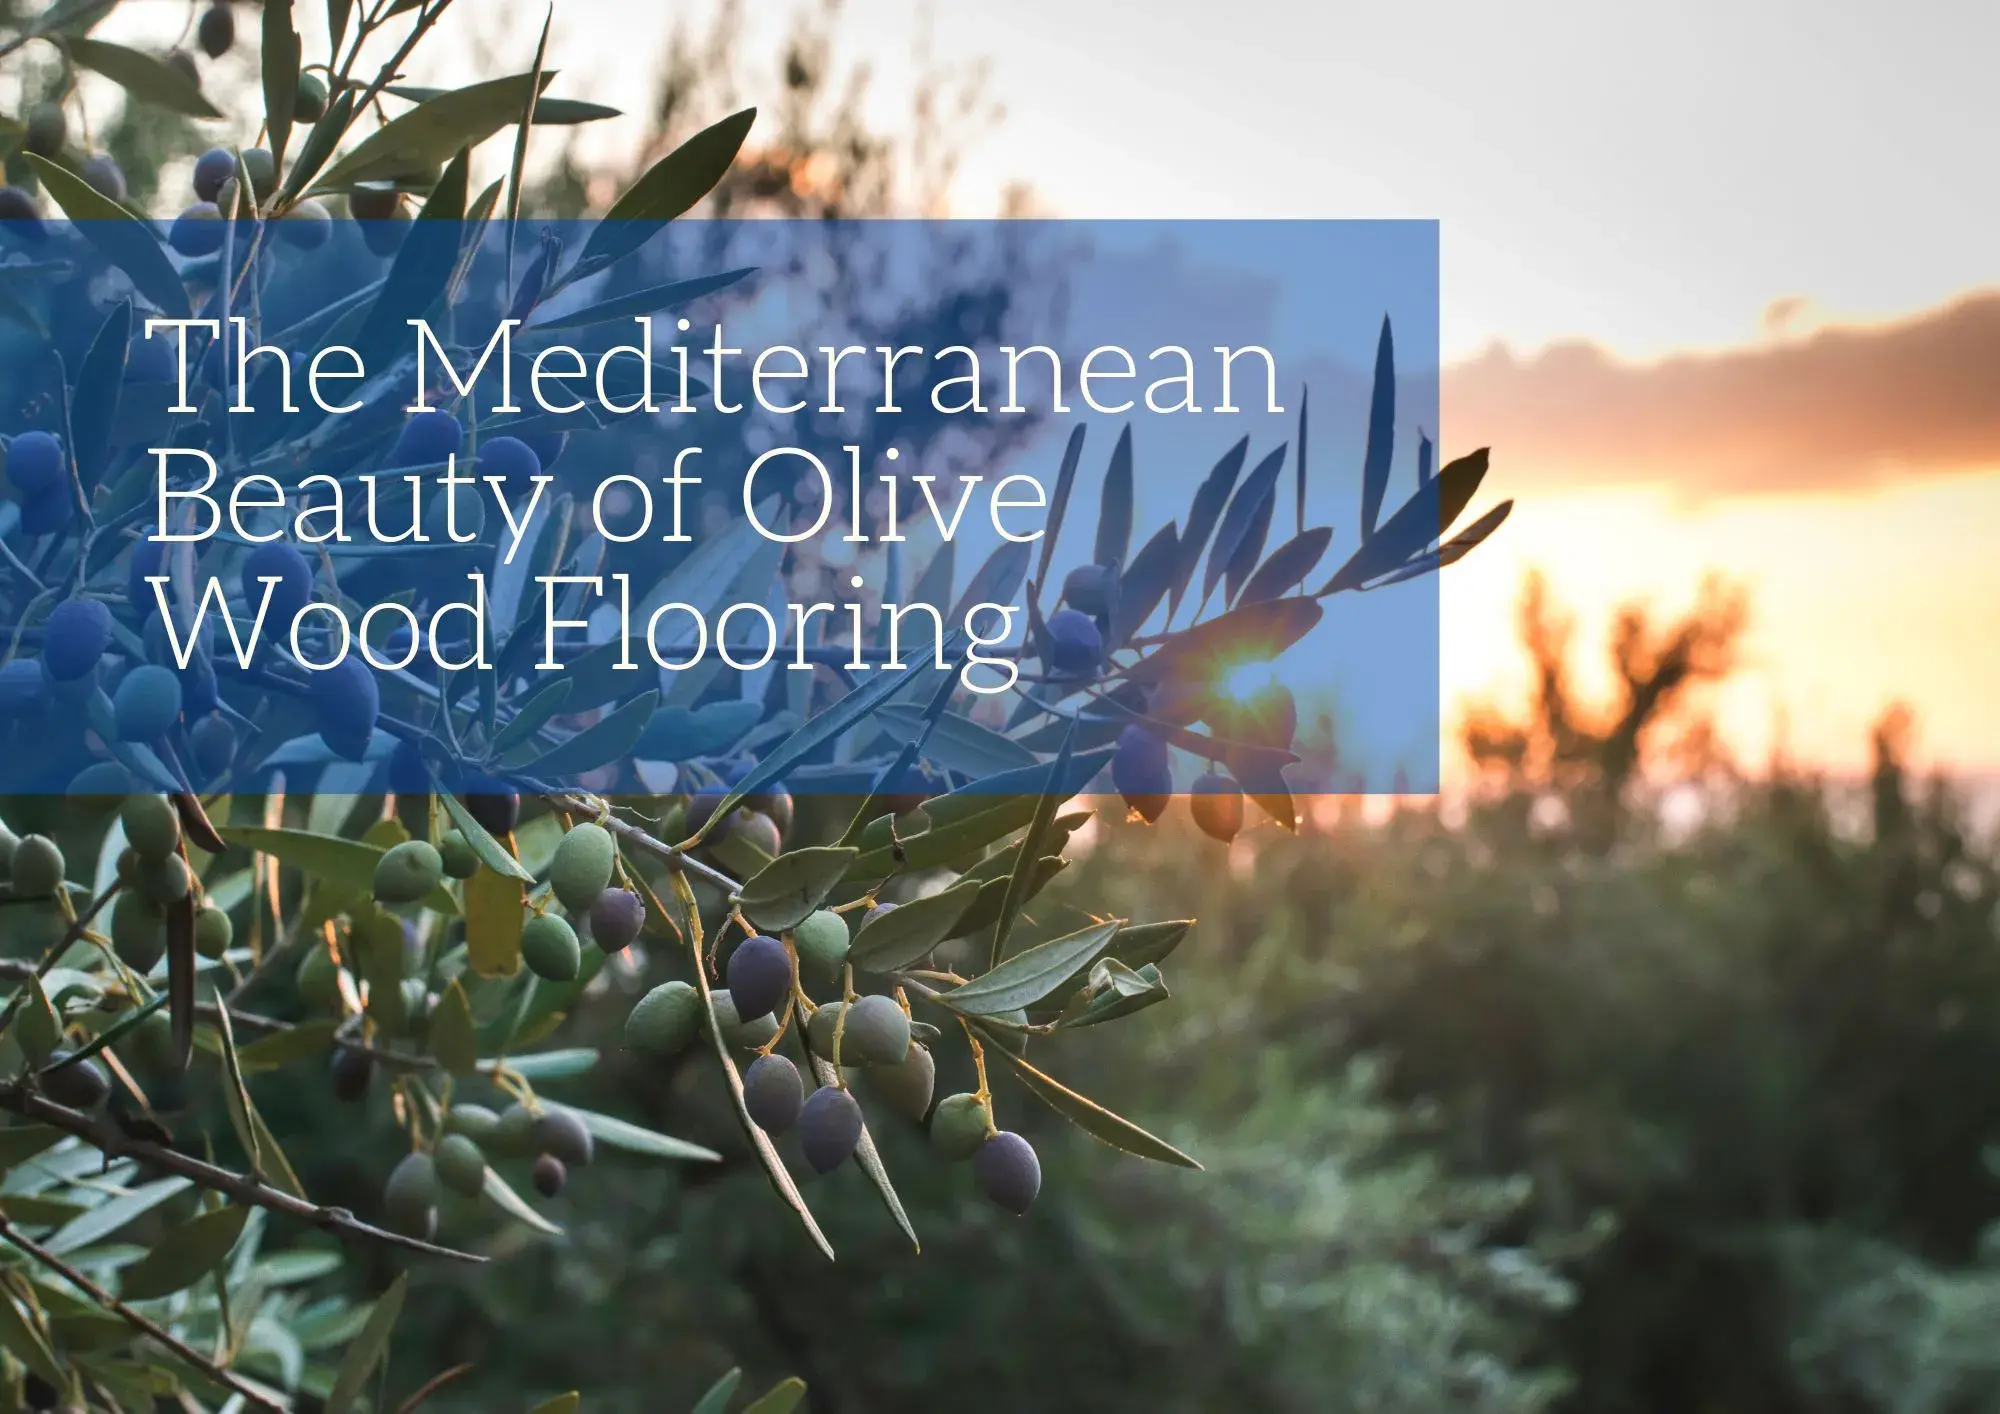 The Mediterranean Beauty of Olive Wood Flooring